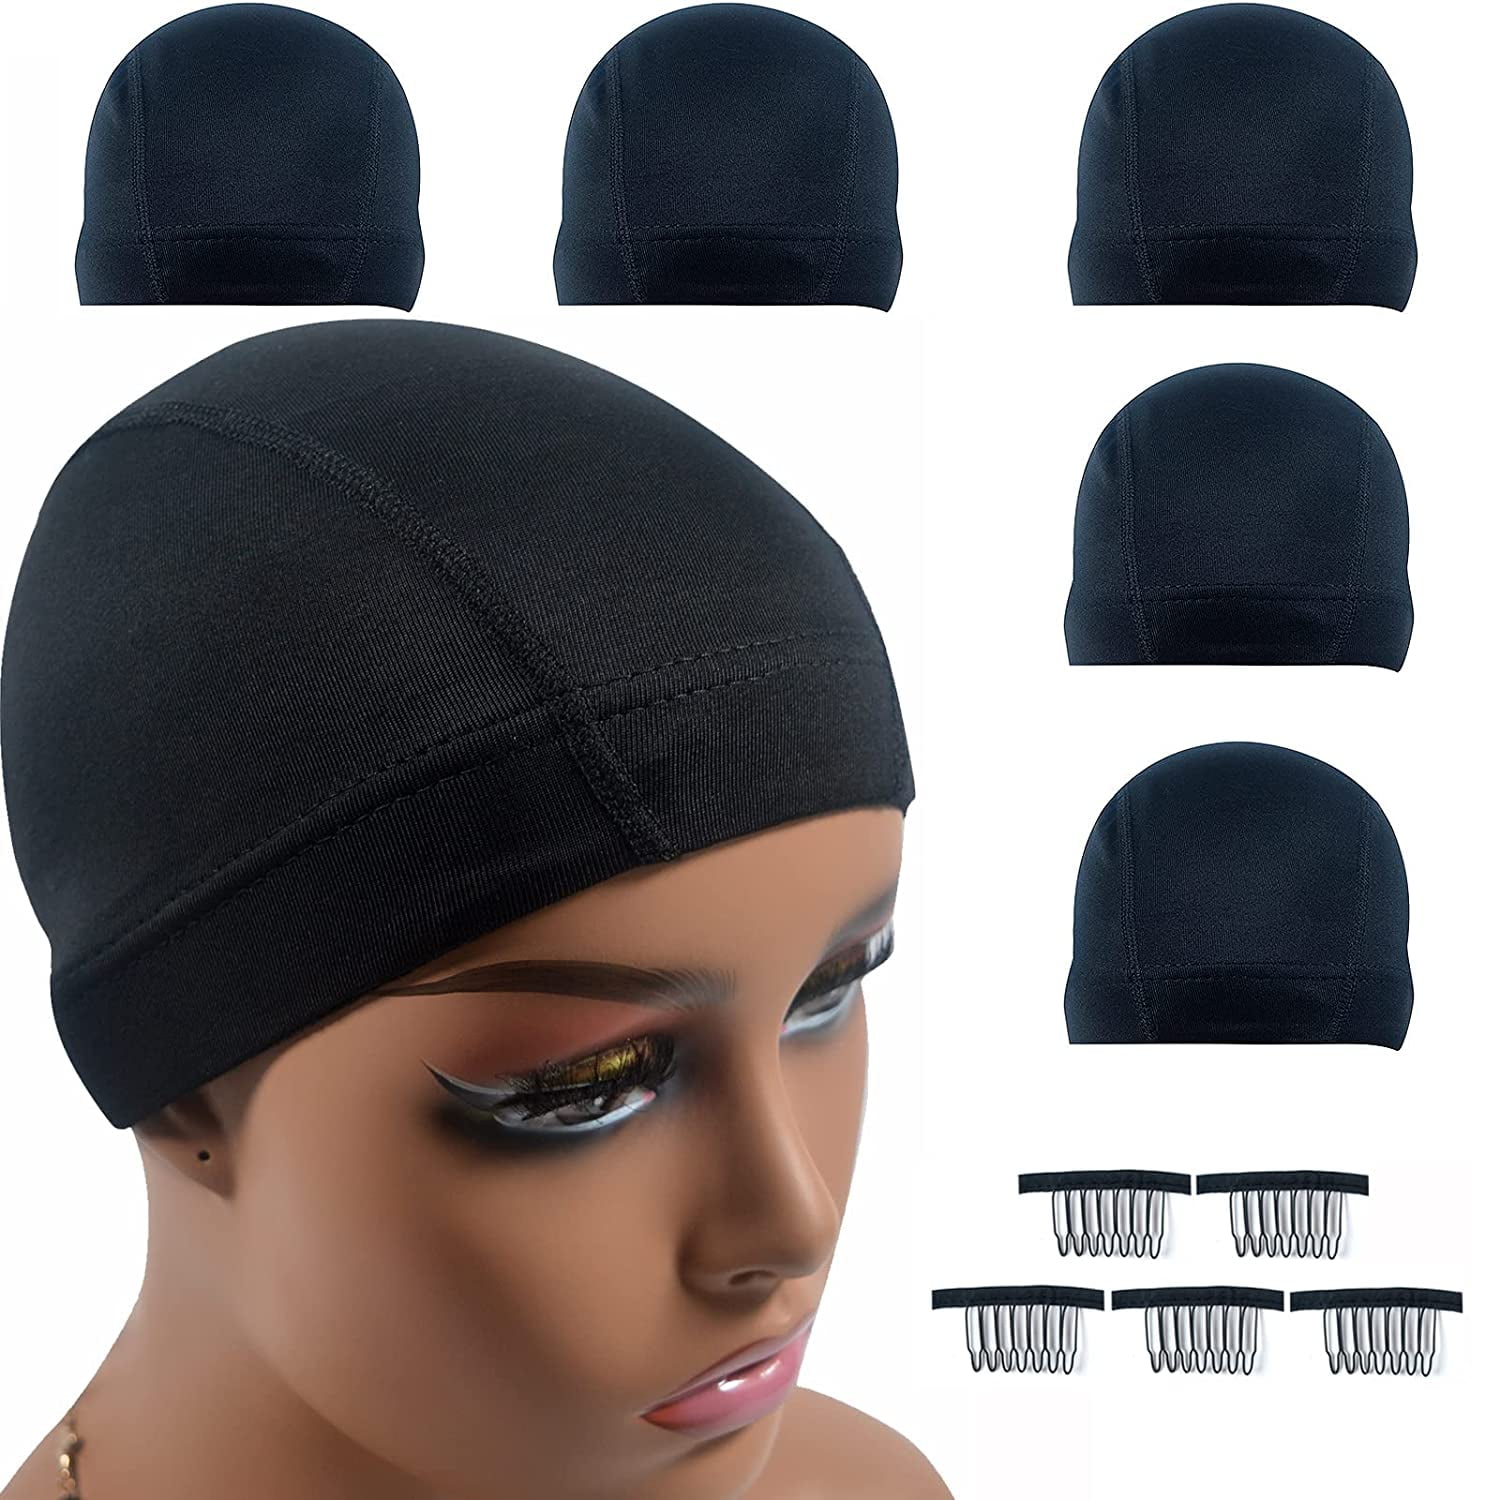 2Pcs Large Size U Part Wig Cap For Making Wigs Glueless Spandex Dome Untra  Strech Wig Cap Mesh Dome Cap Black Swimming Cap 